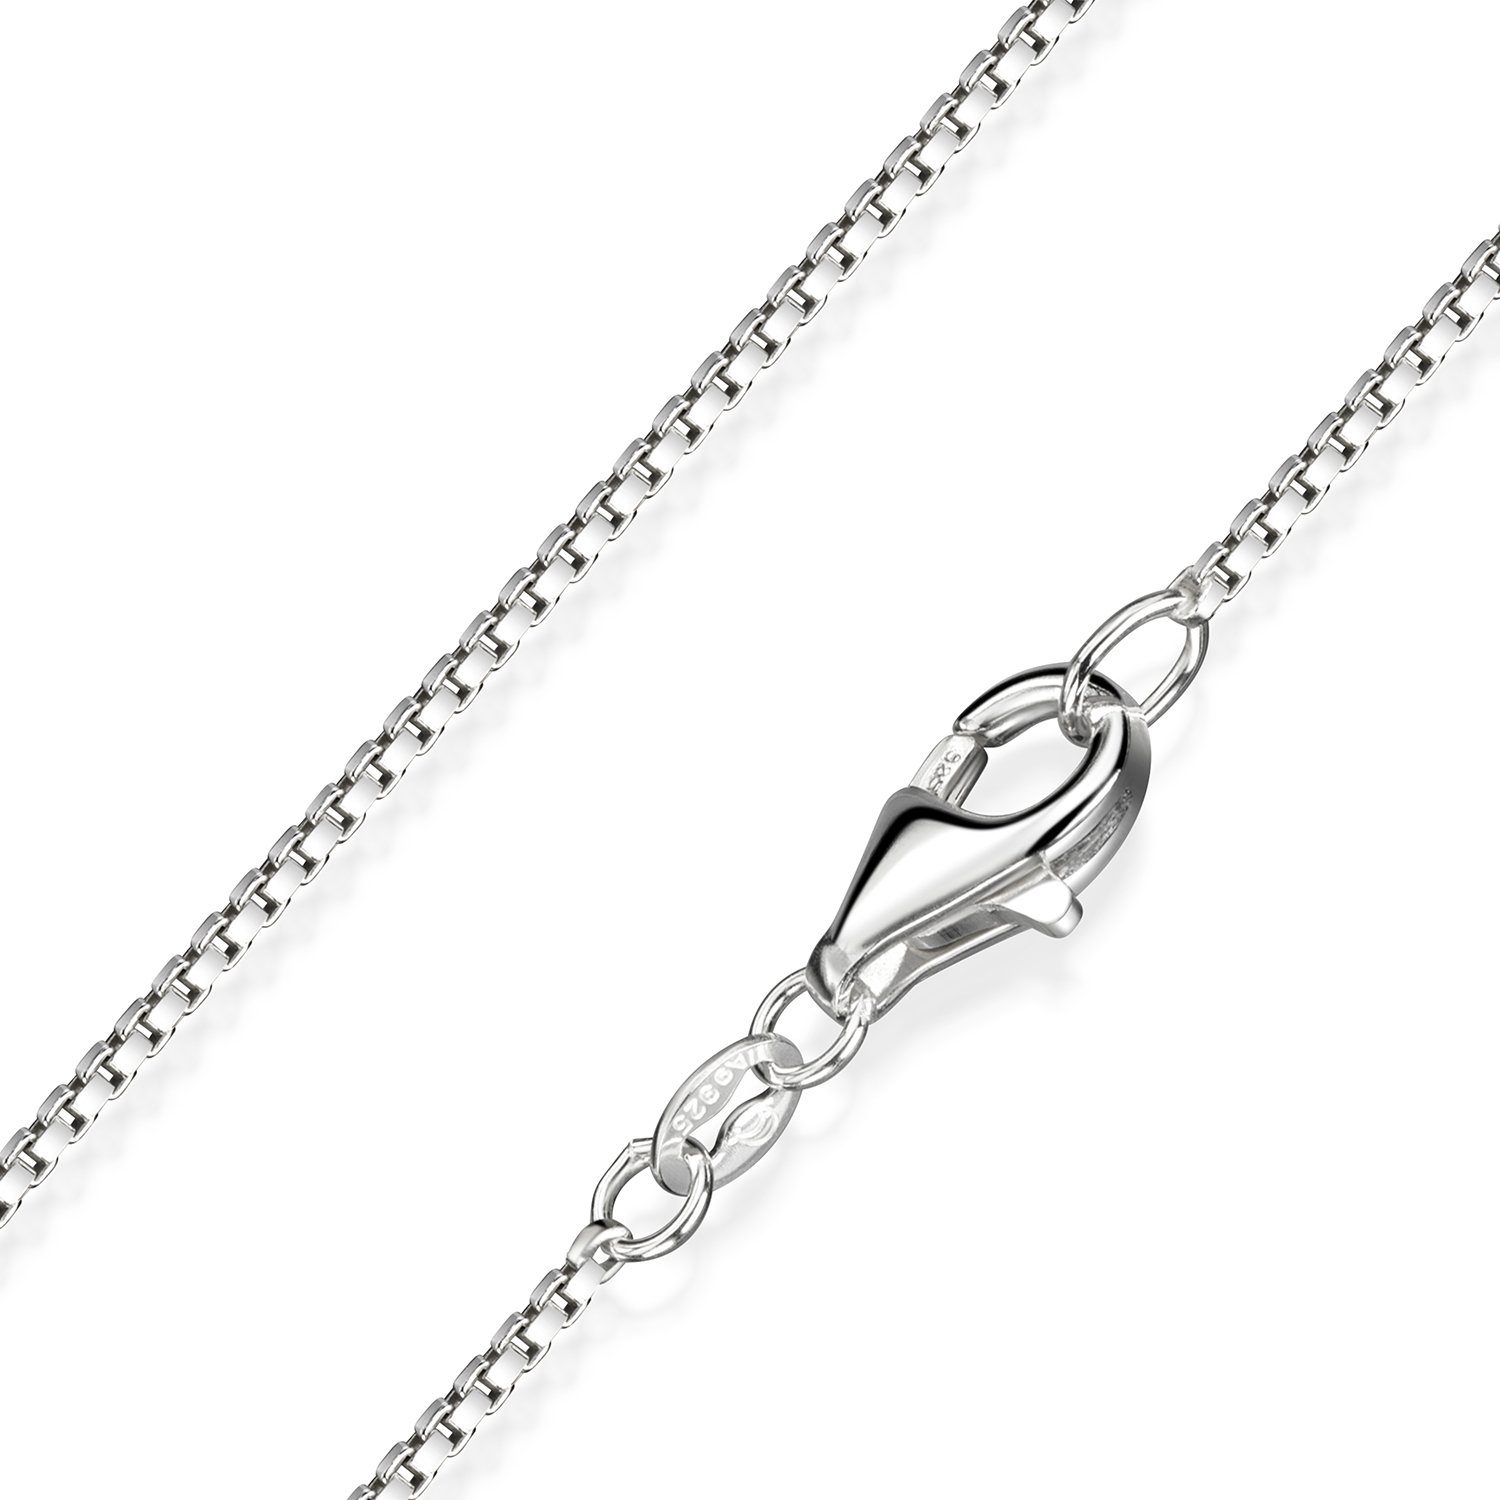 Materia Silberkette Damen Venezianerkette Silber glänzend 40-70cm K46, 925 Sterling Silber, diamantiert